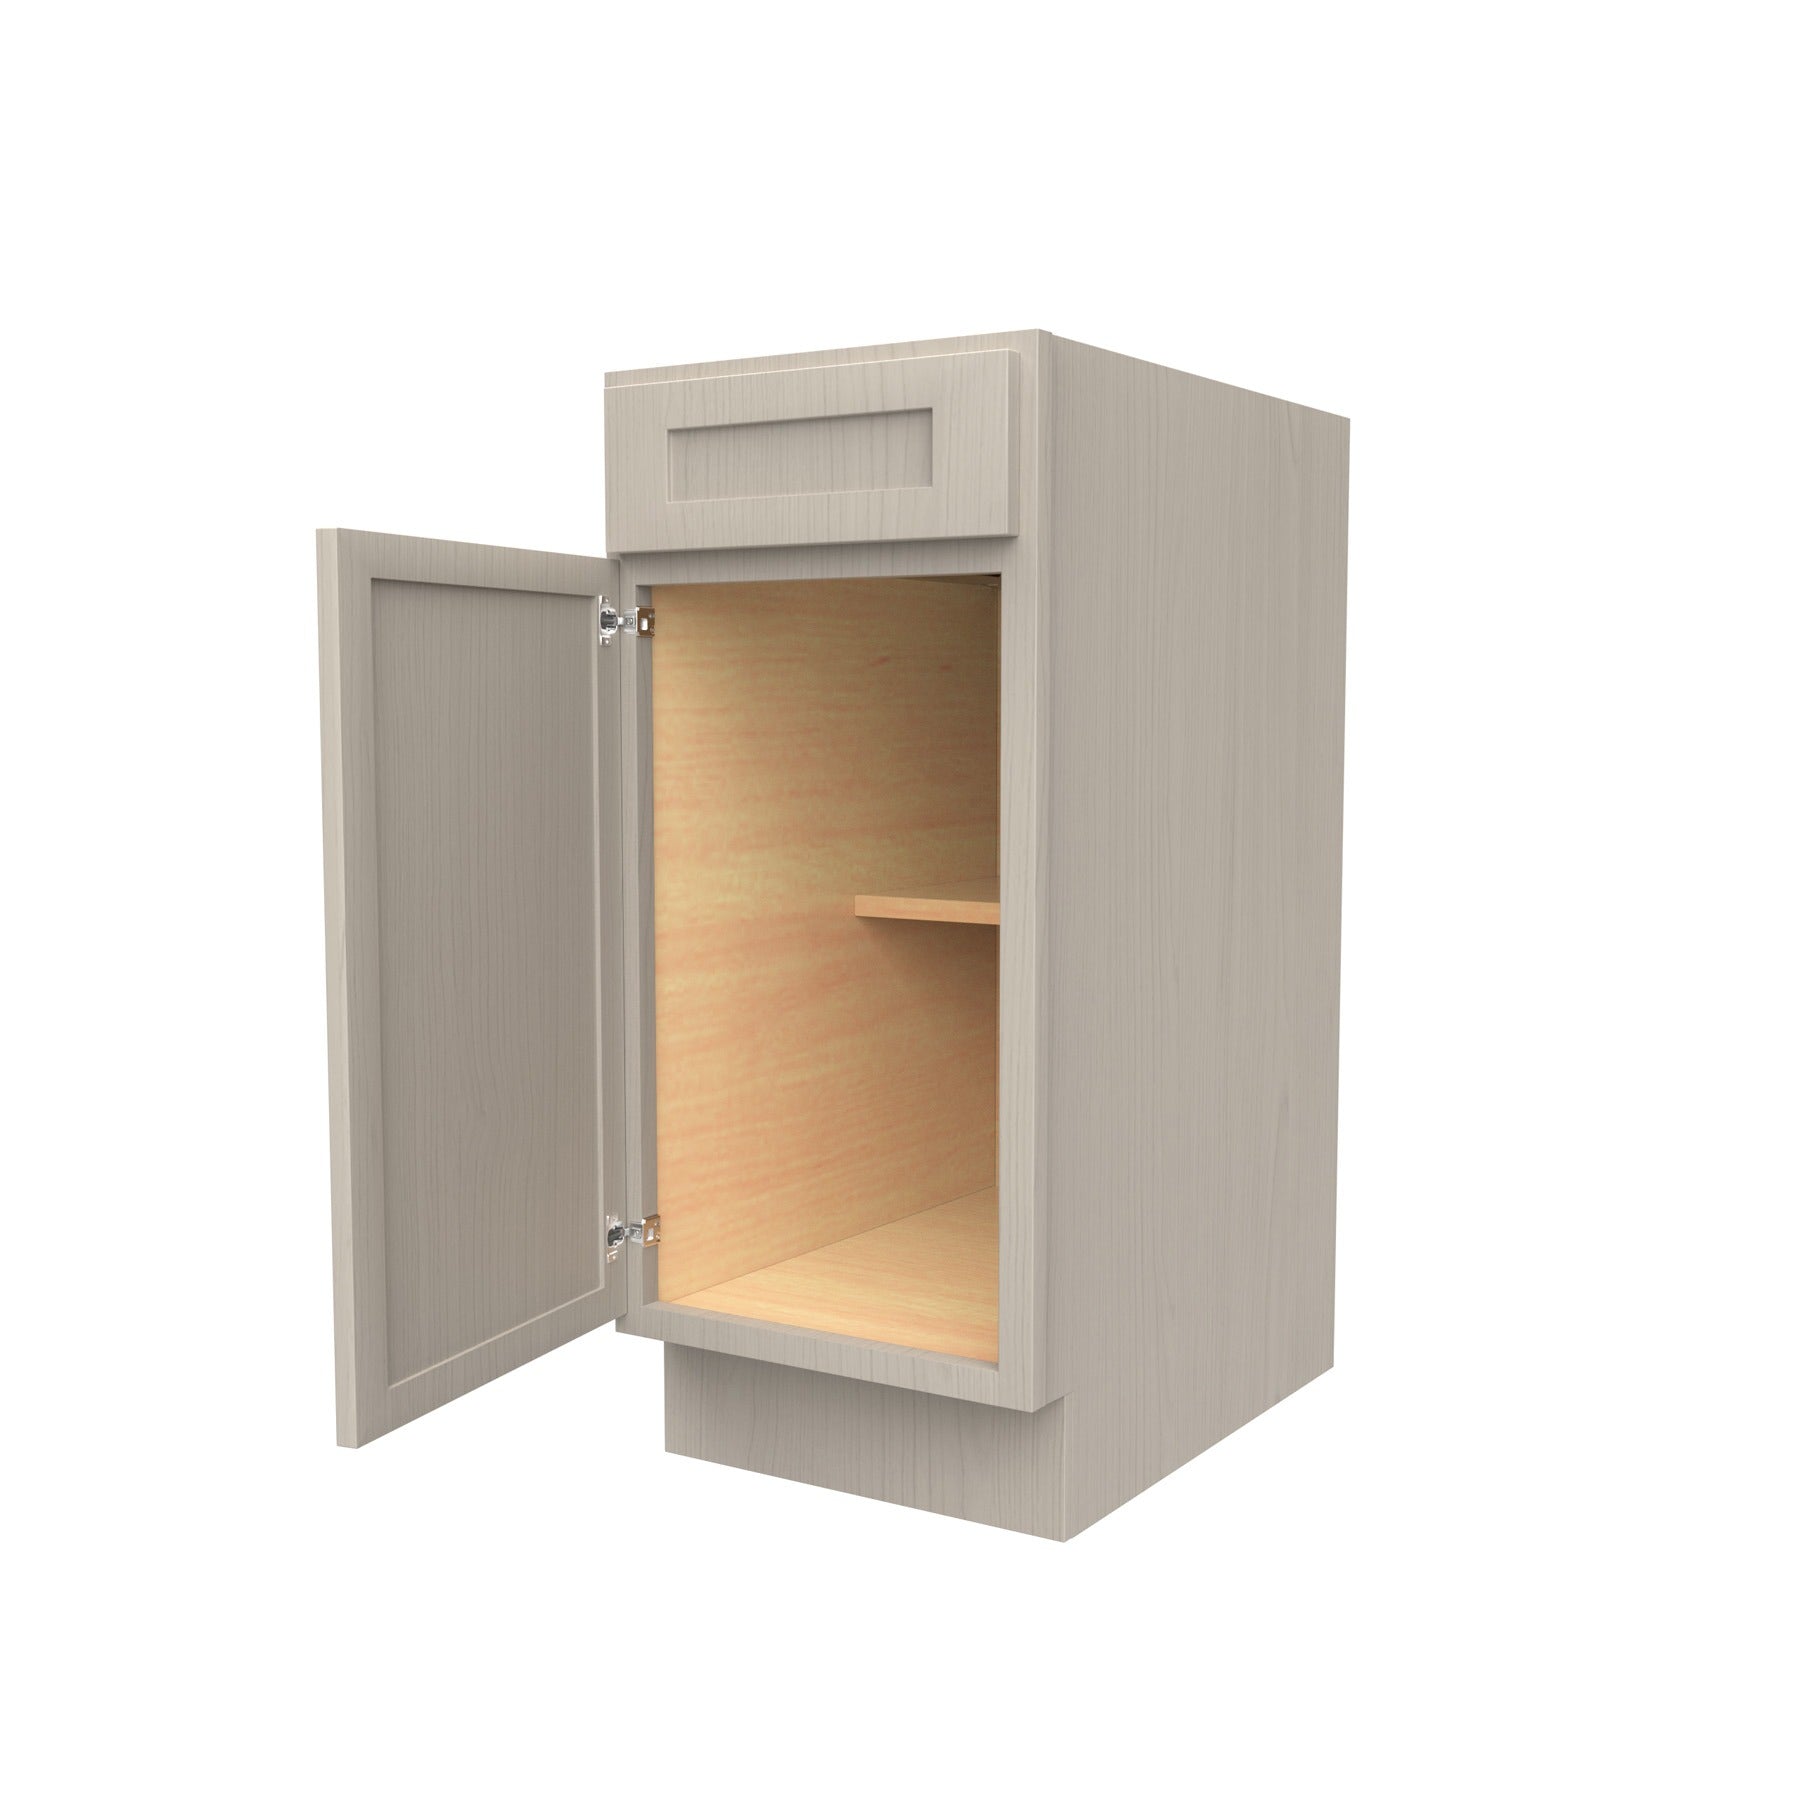 Single Door Base Kitchen Cabinet | Elegant Stone| 15W x34.5H x24D